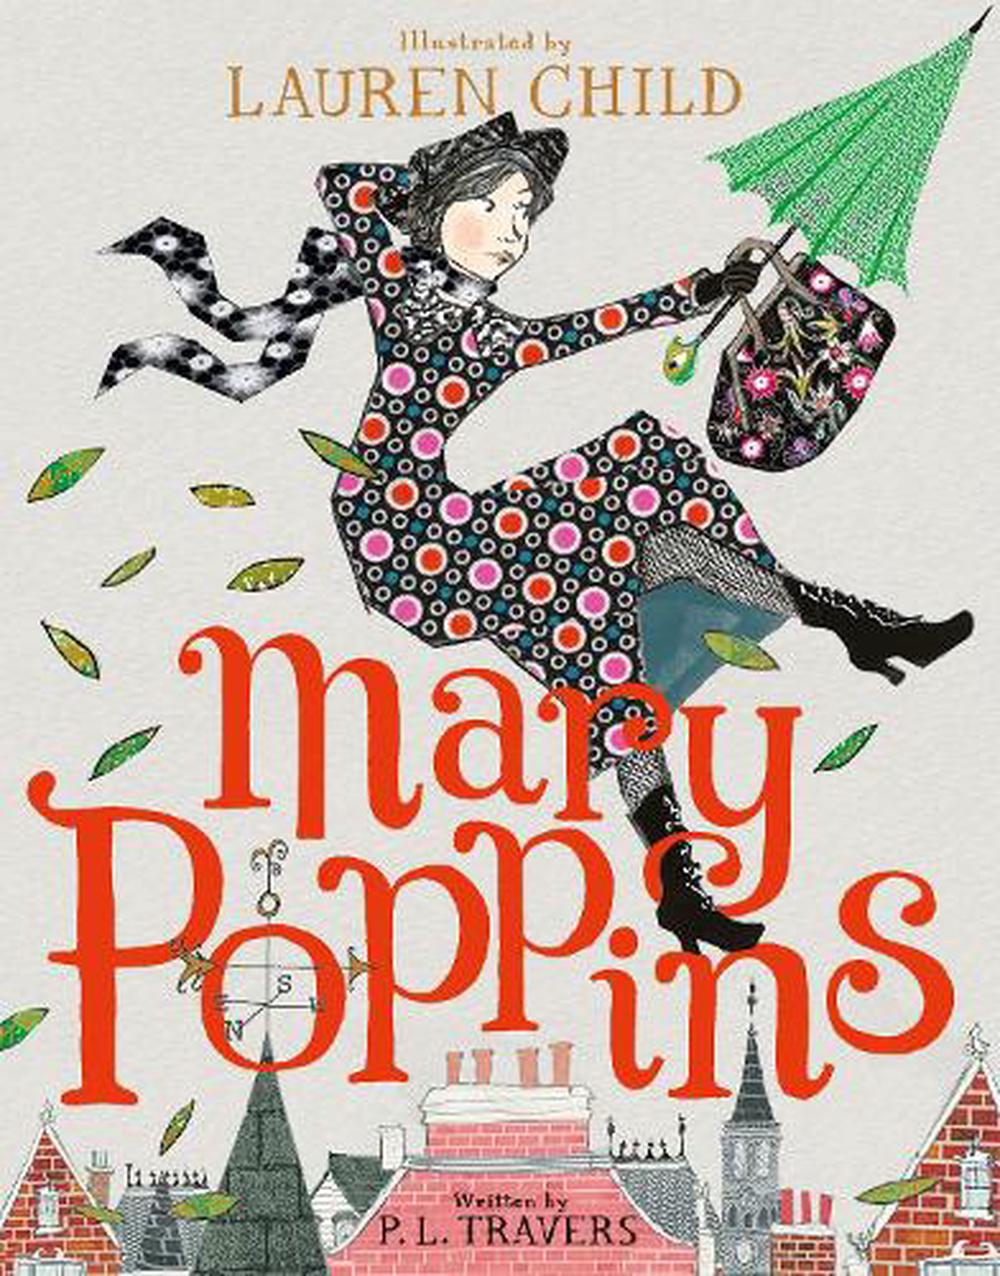 mary poppins books